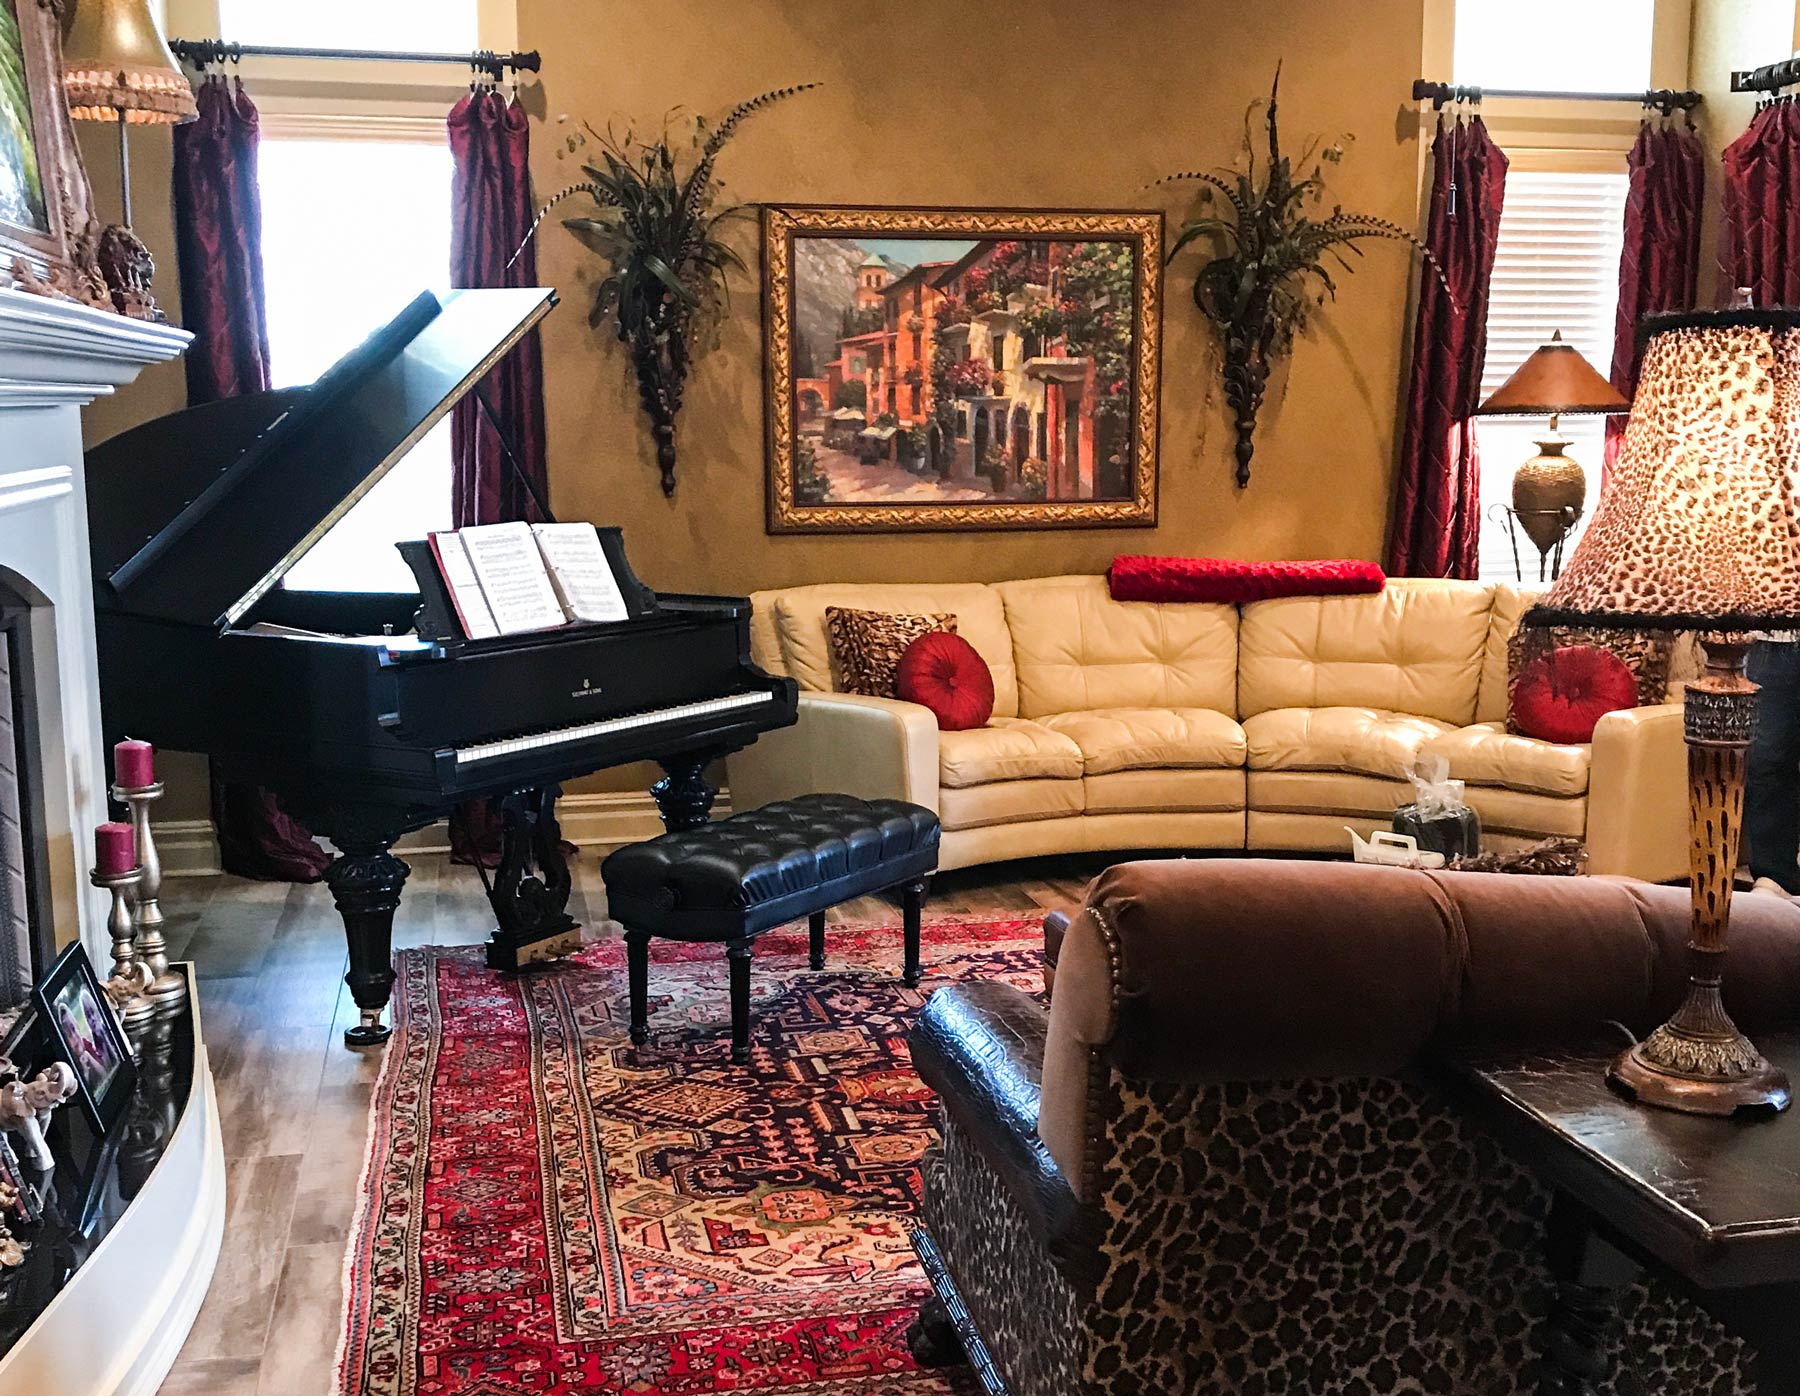 Art Case Steinway Model A-2 Grand Piano in Home - Chupp's Piano Service - Restored Pianos for Sale